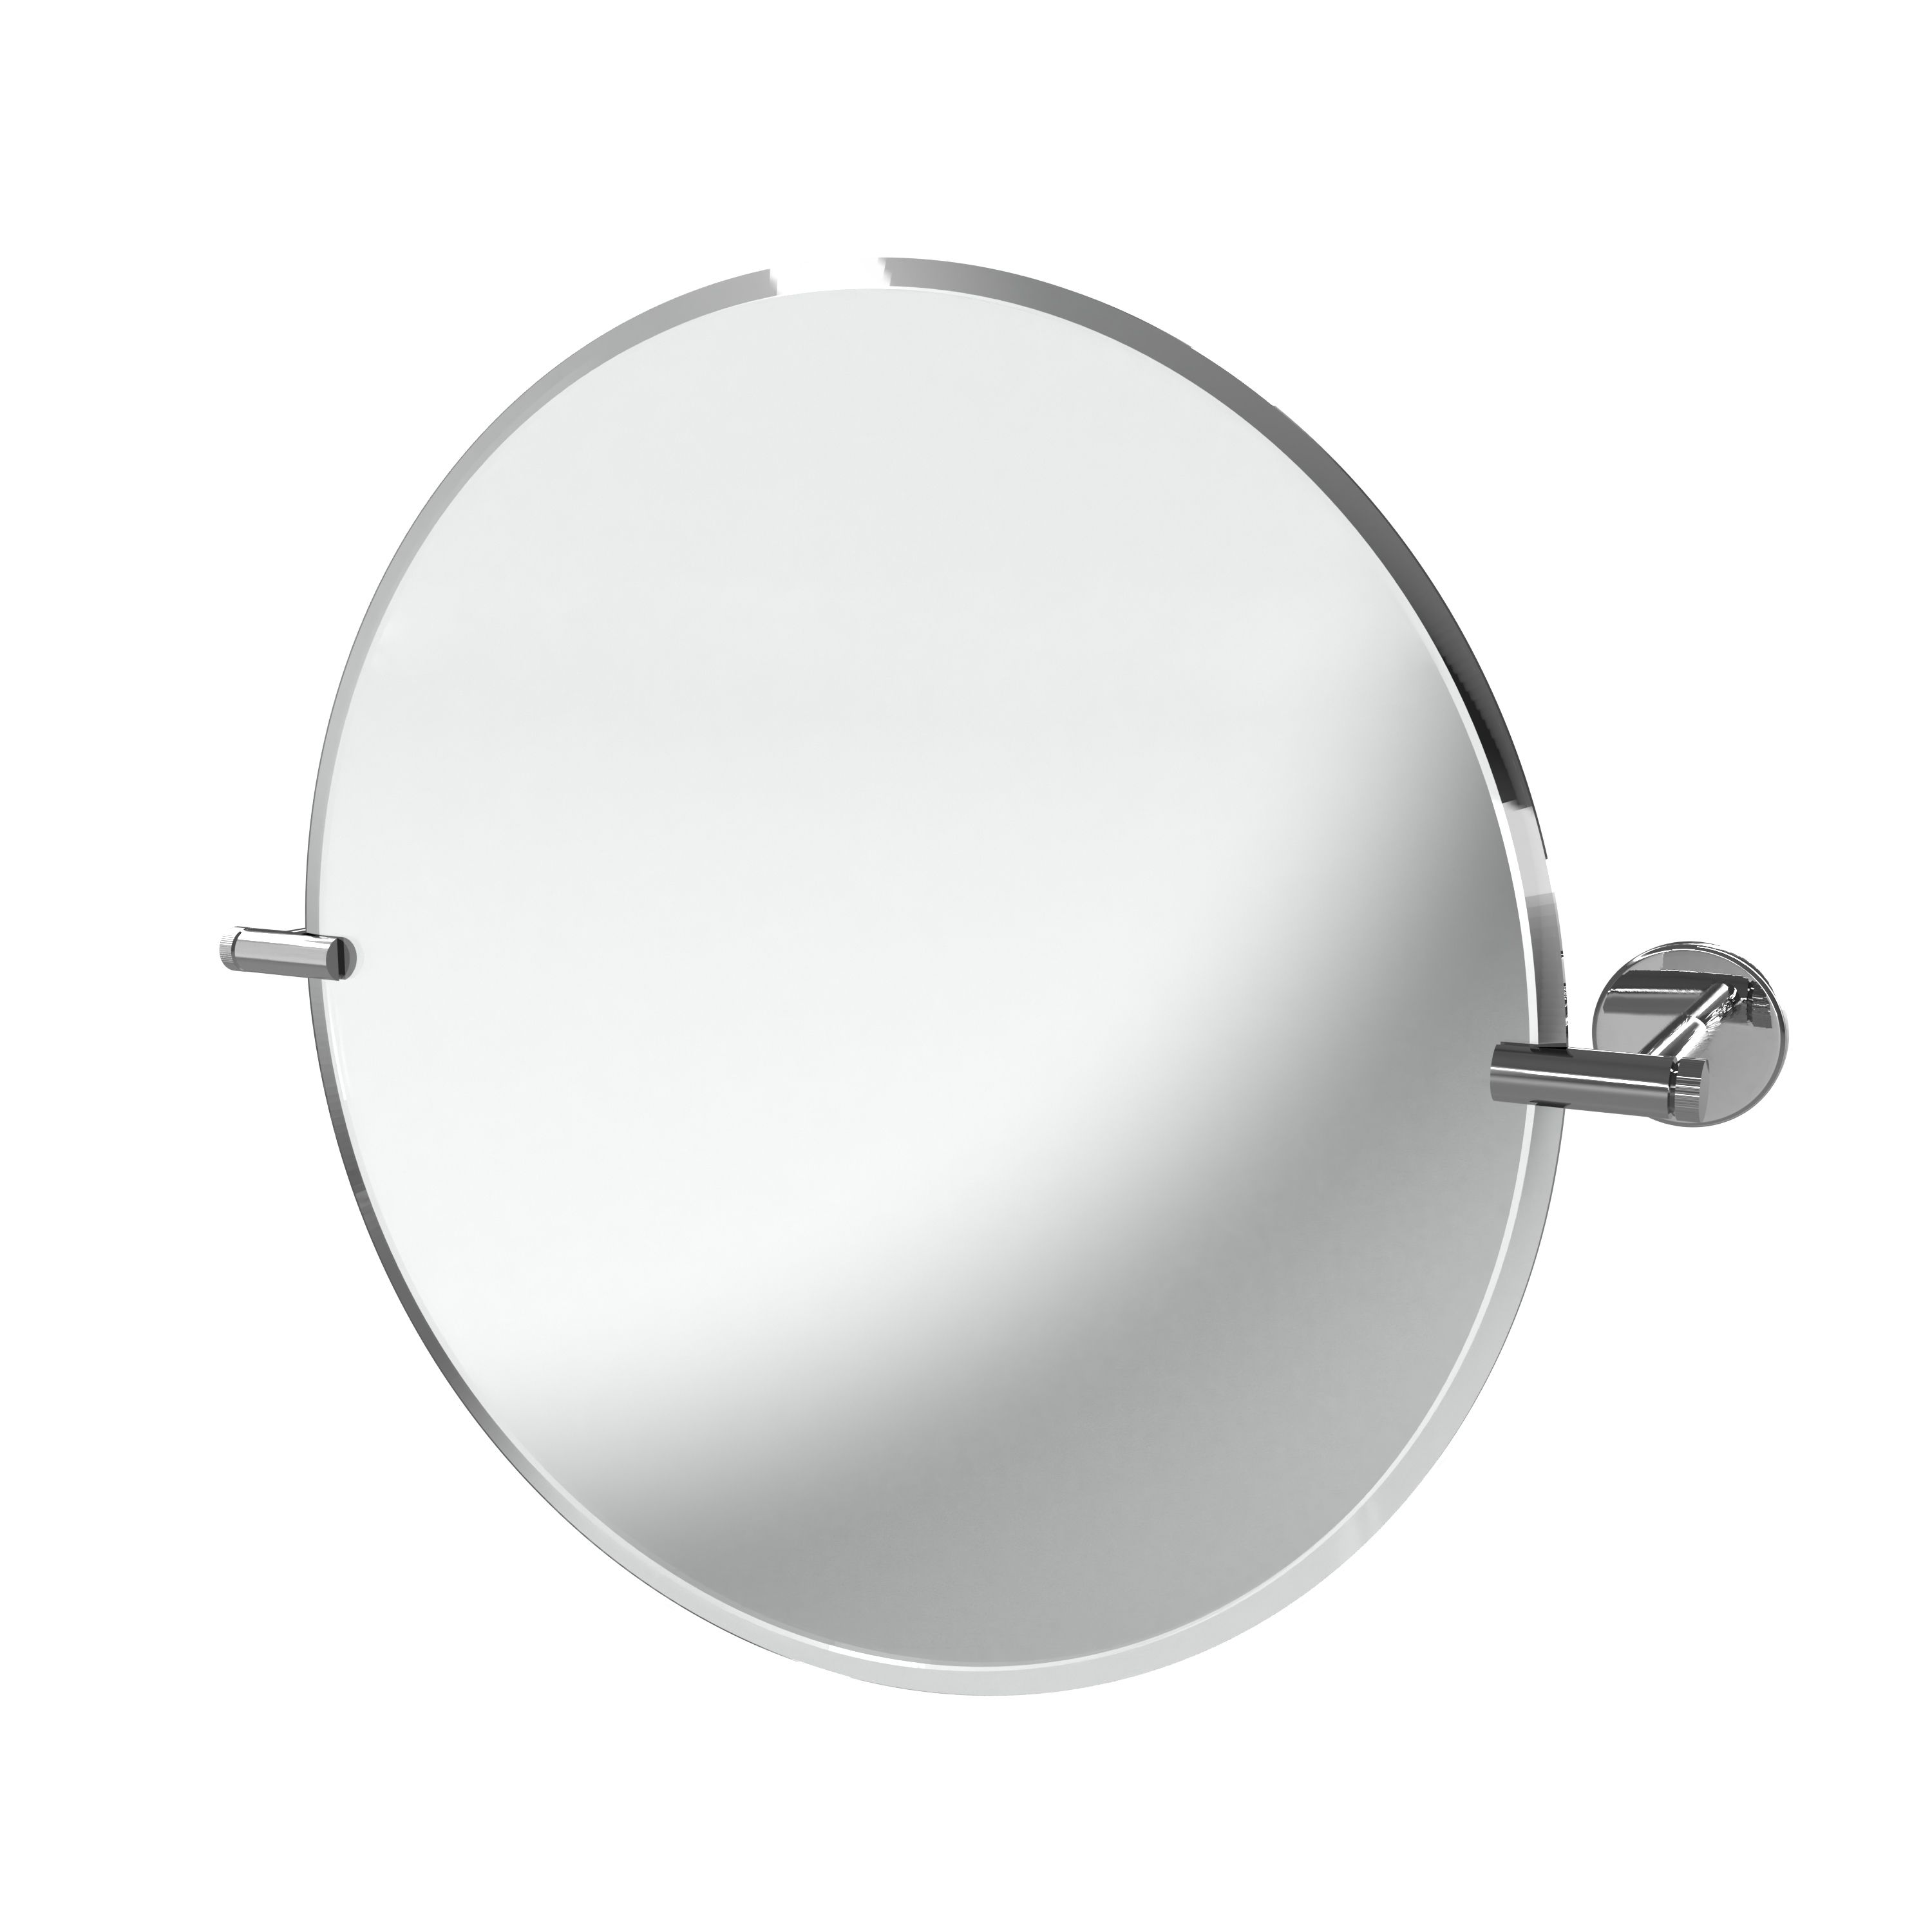 Sensio Pearl Chrome effect Round Wall-mounted Bathroom & WC Non